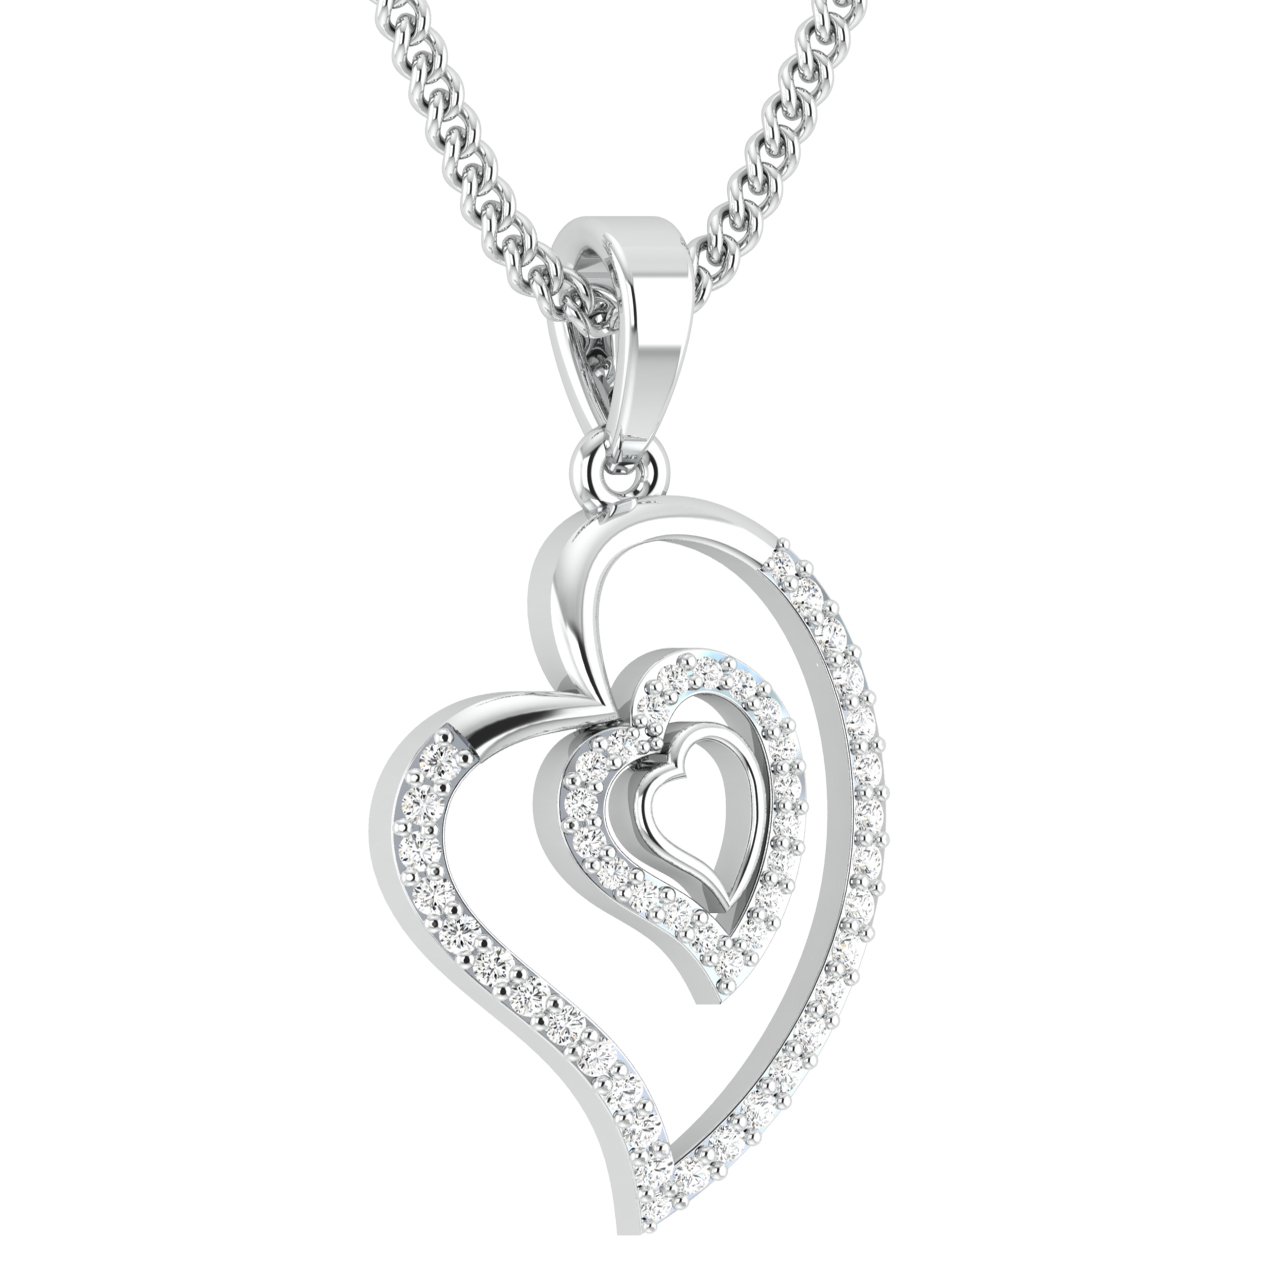 Triple Layer Heart Design Diamond Pendant